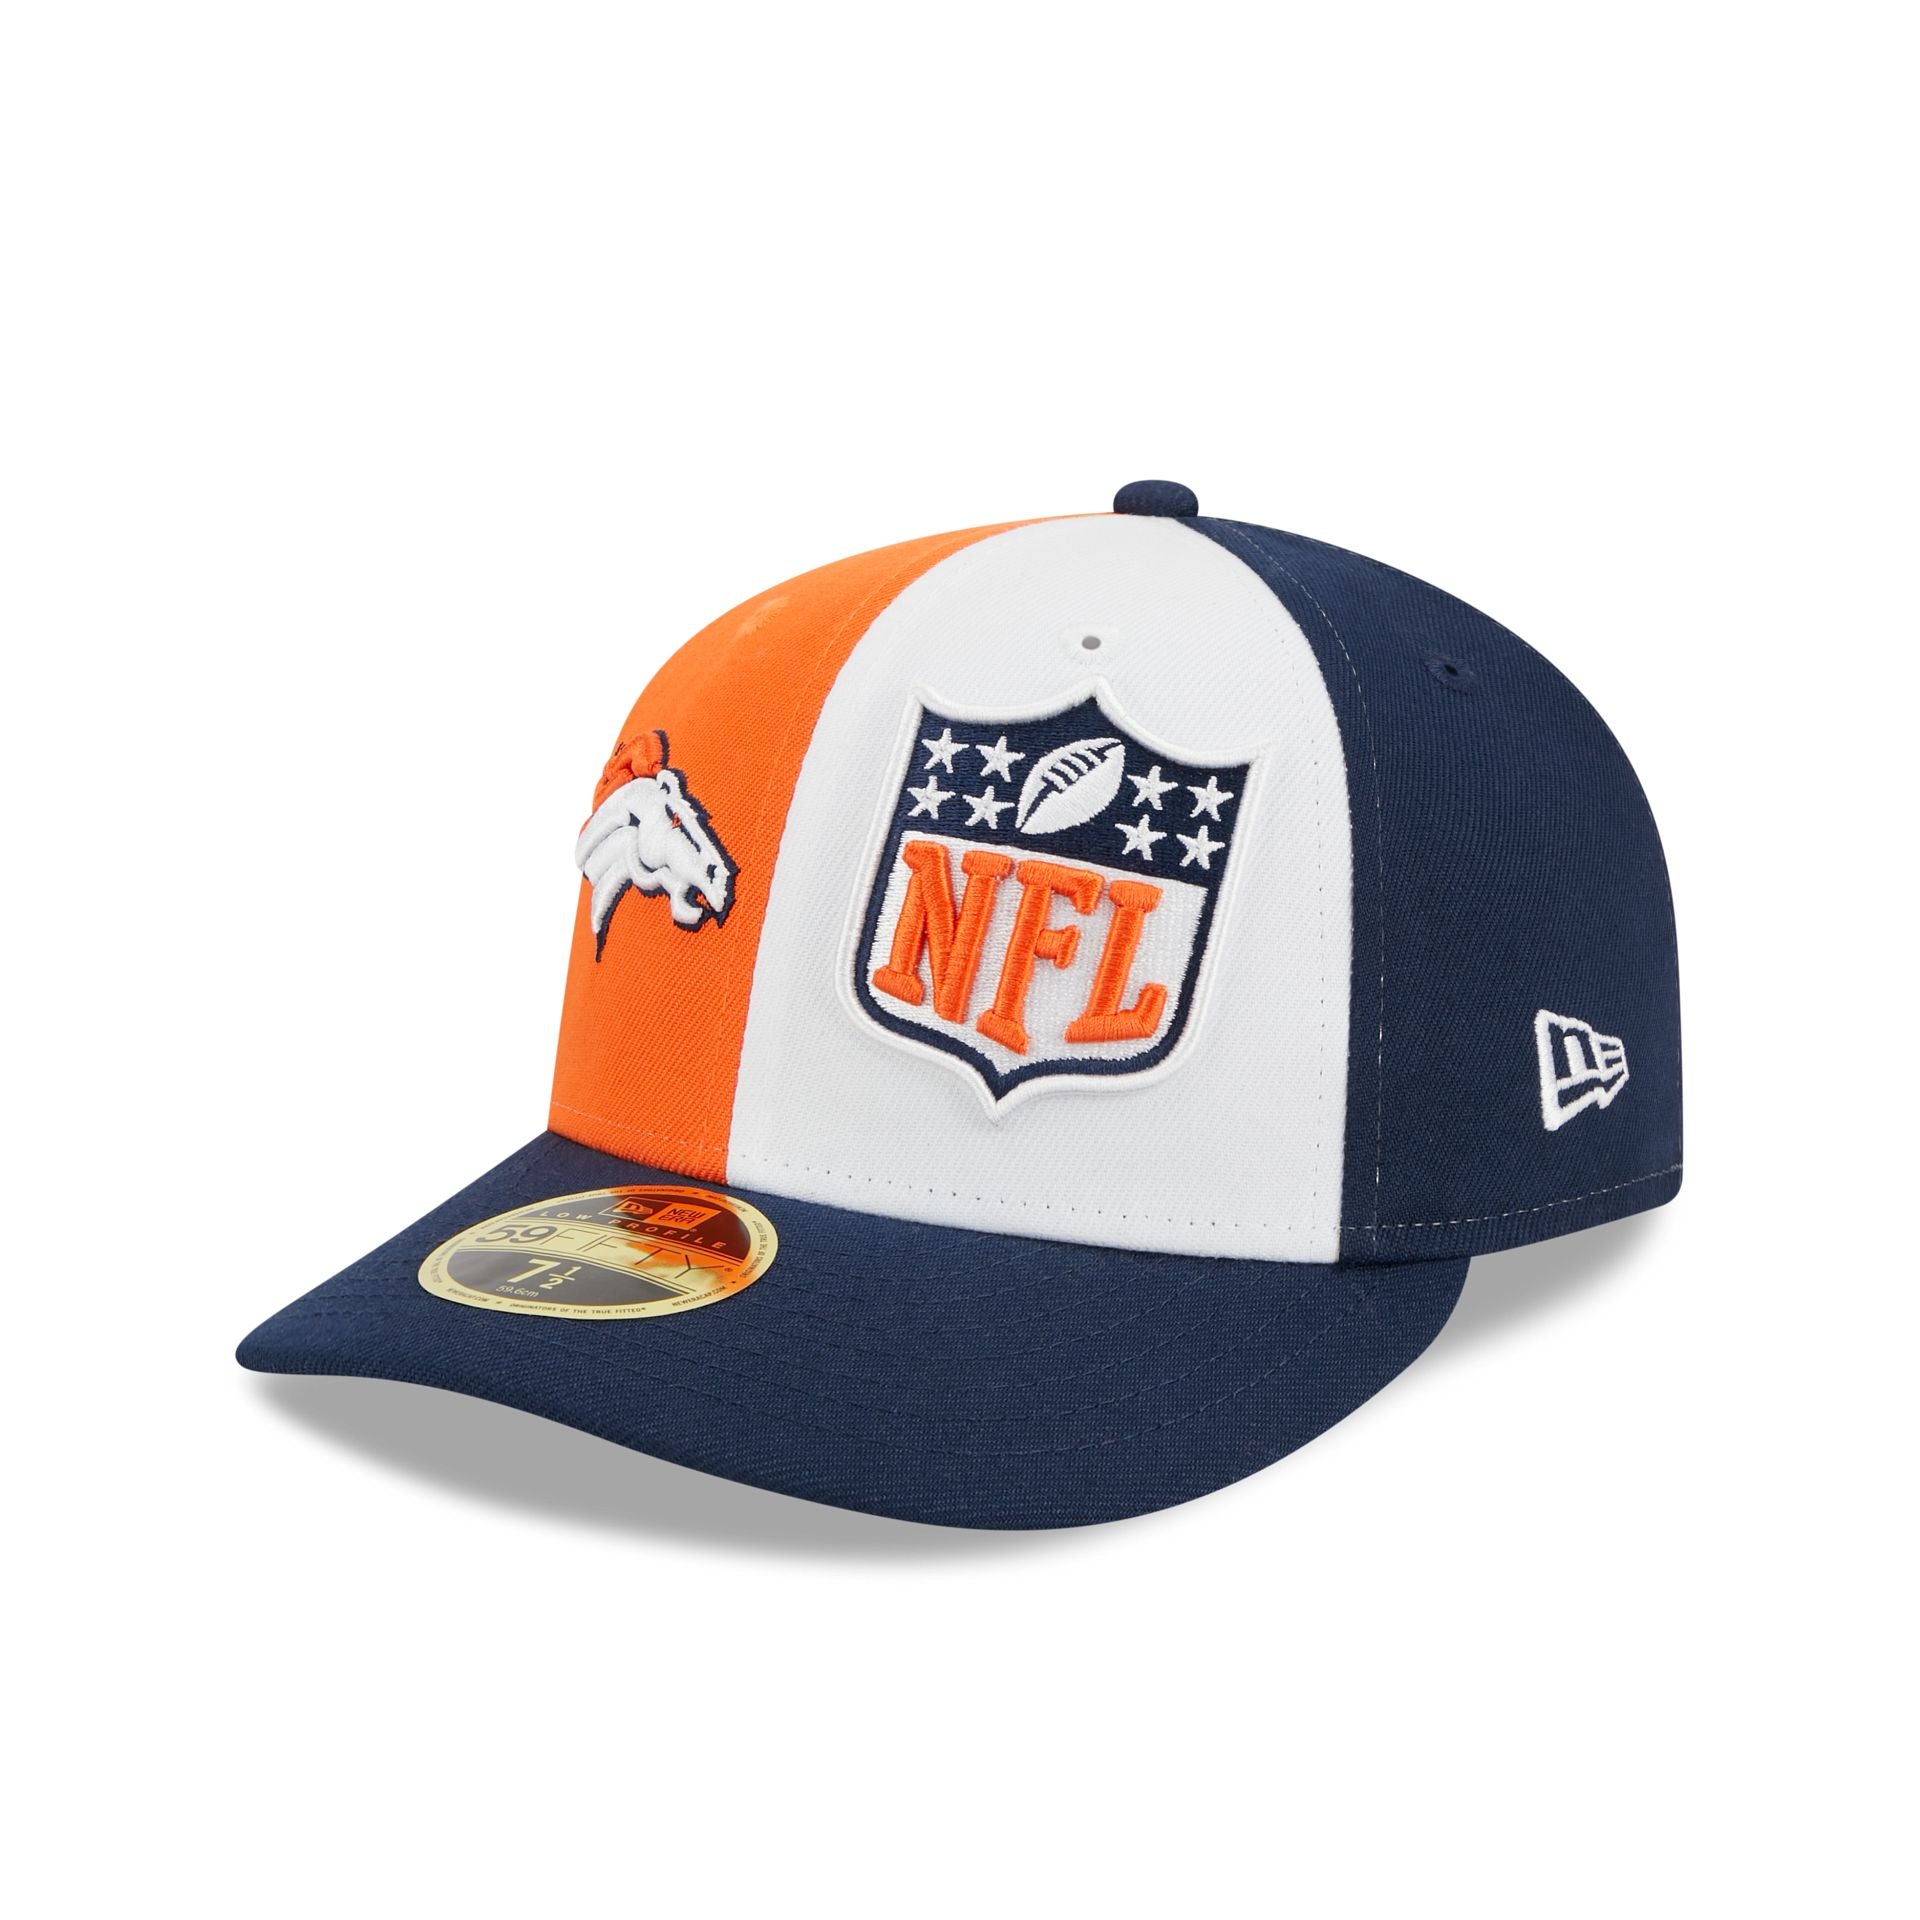 Denver Broncos New Era Youth Main Trucker 9FIFTY Snapback Hat - Orange